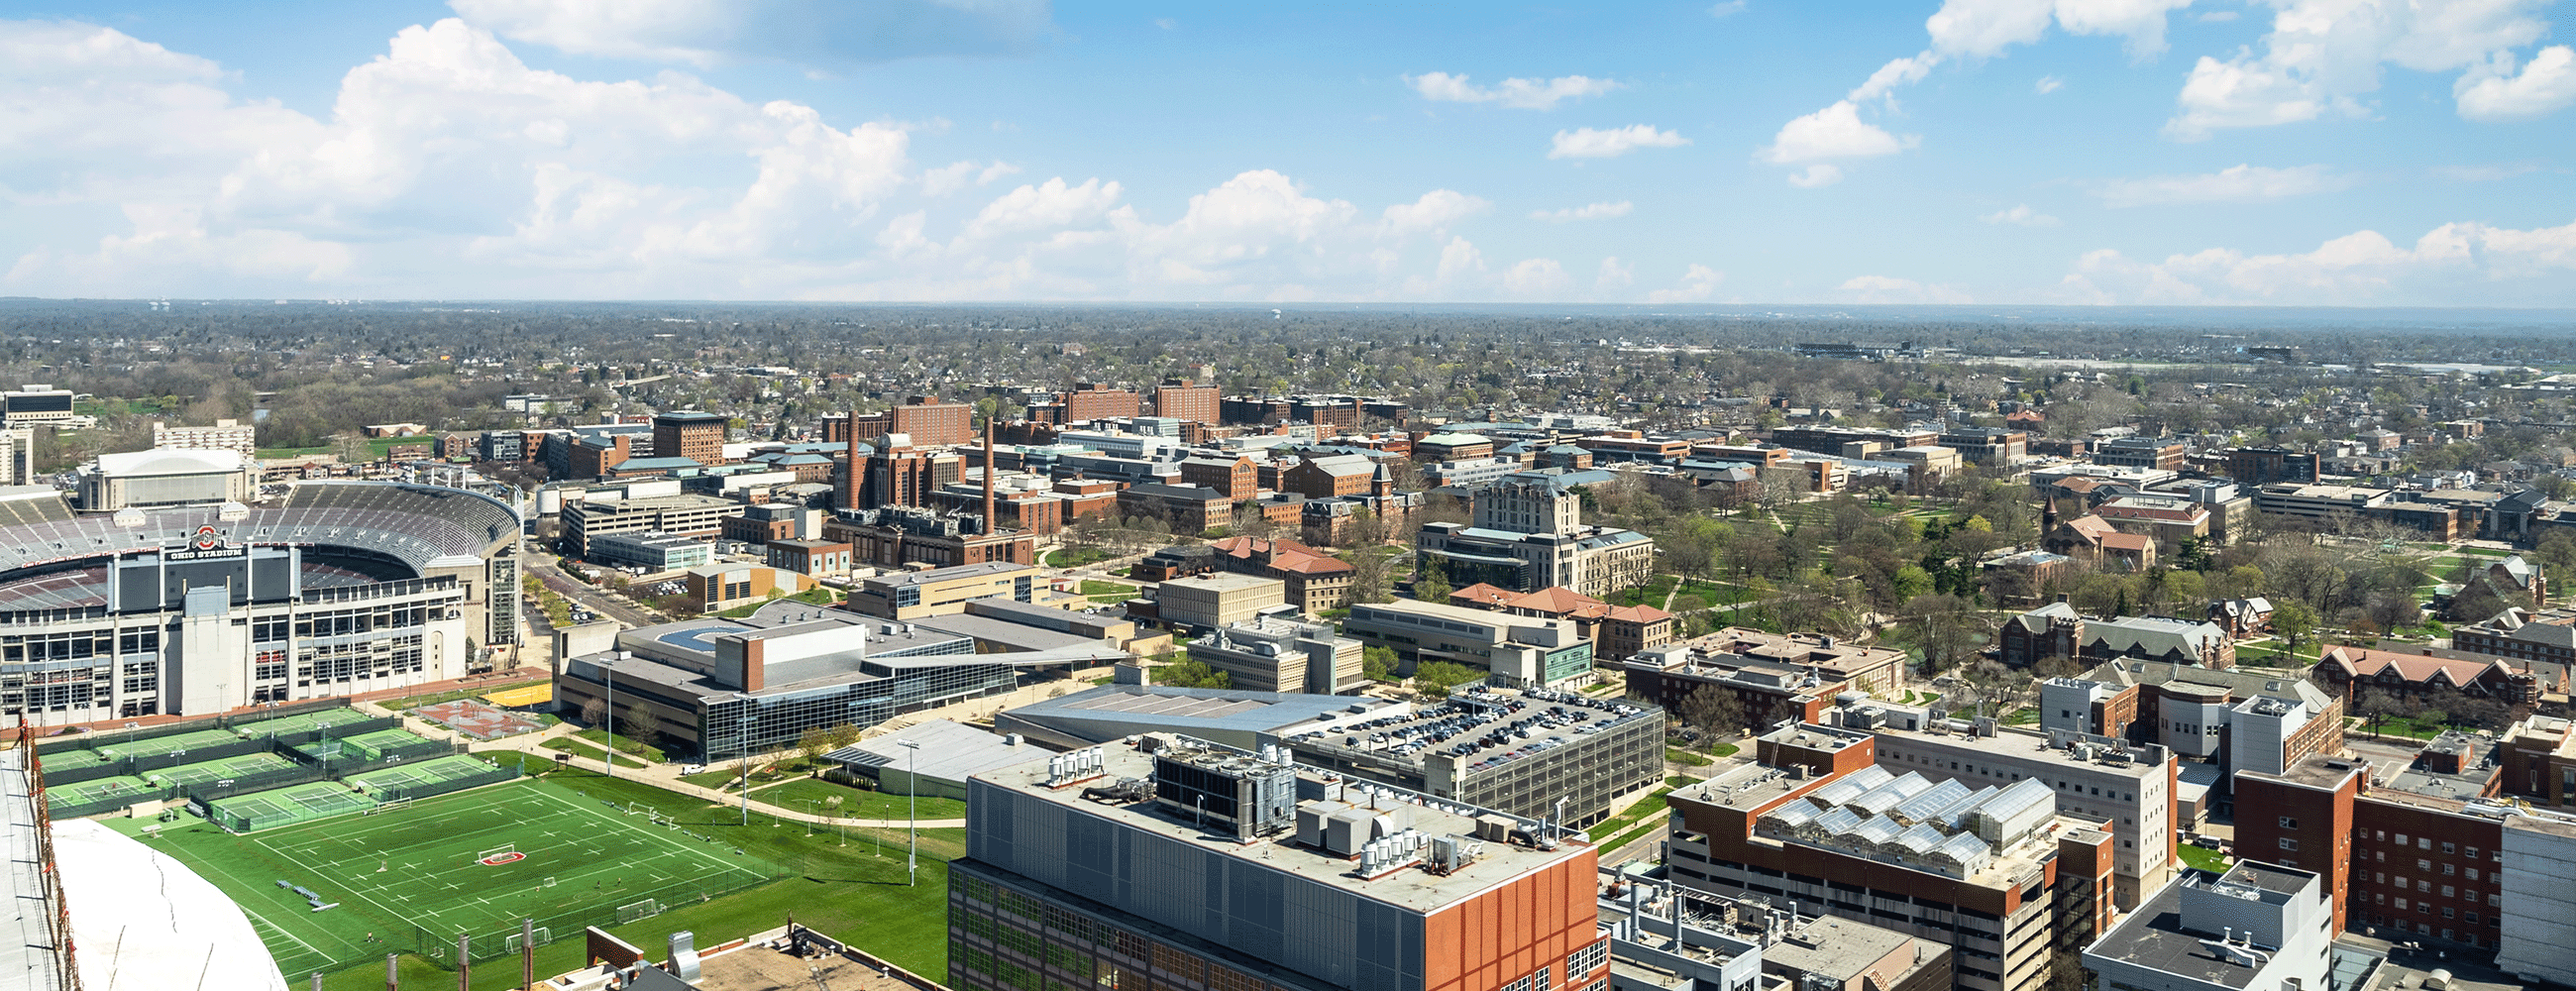 Aerial View of Ohio State Campus